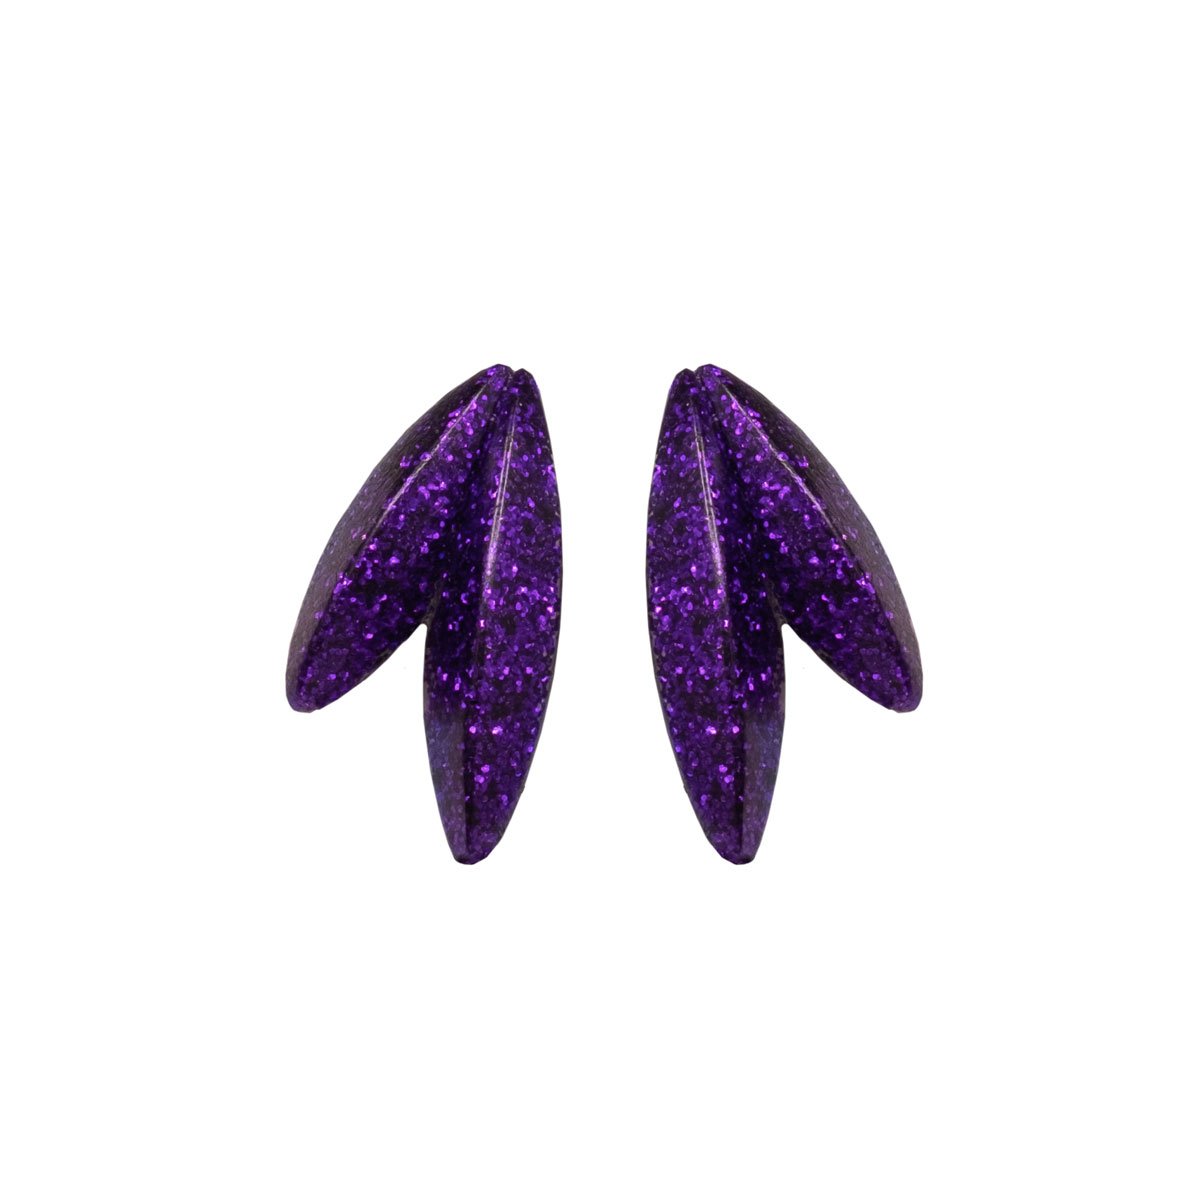 Twin-LEAVES ✕ Shine earrings, violet